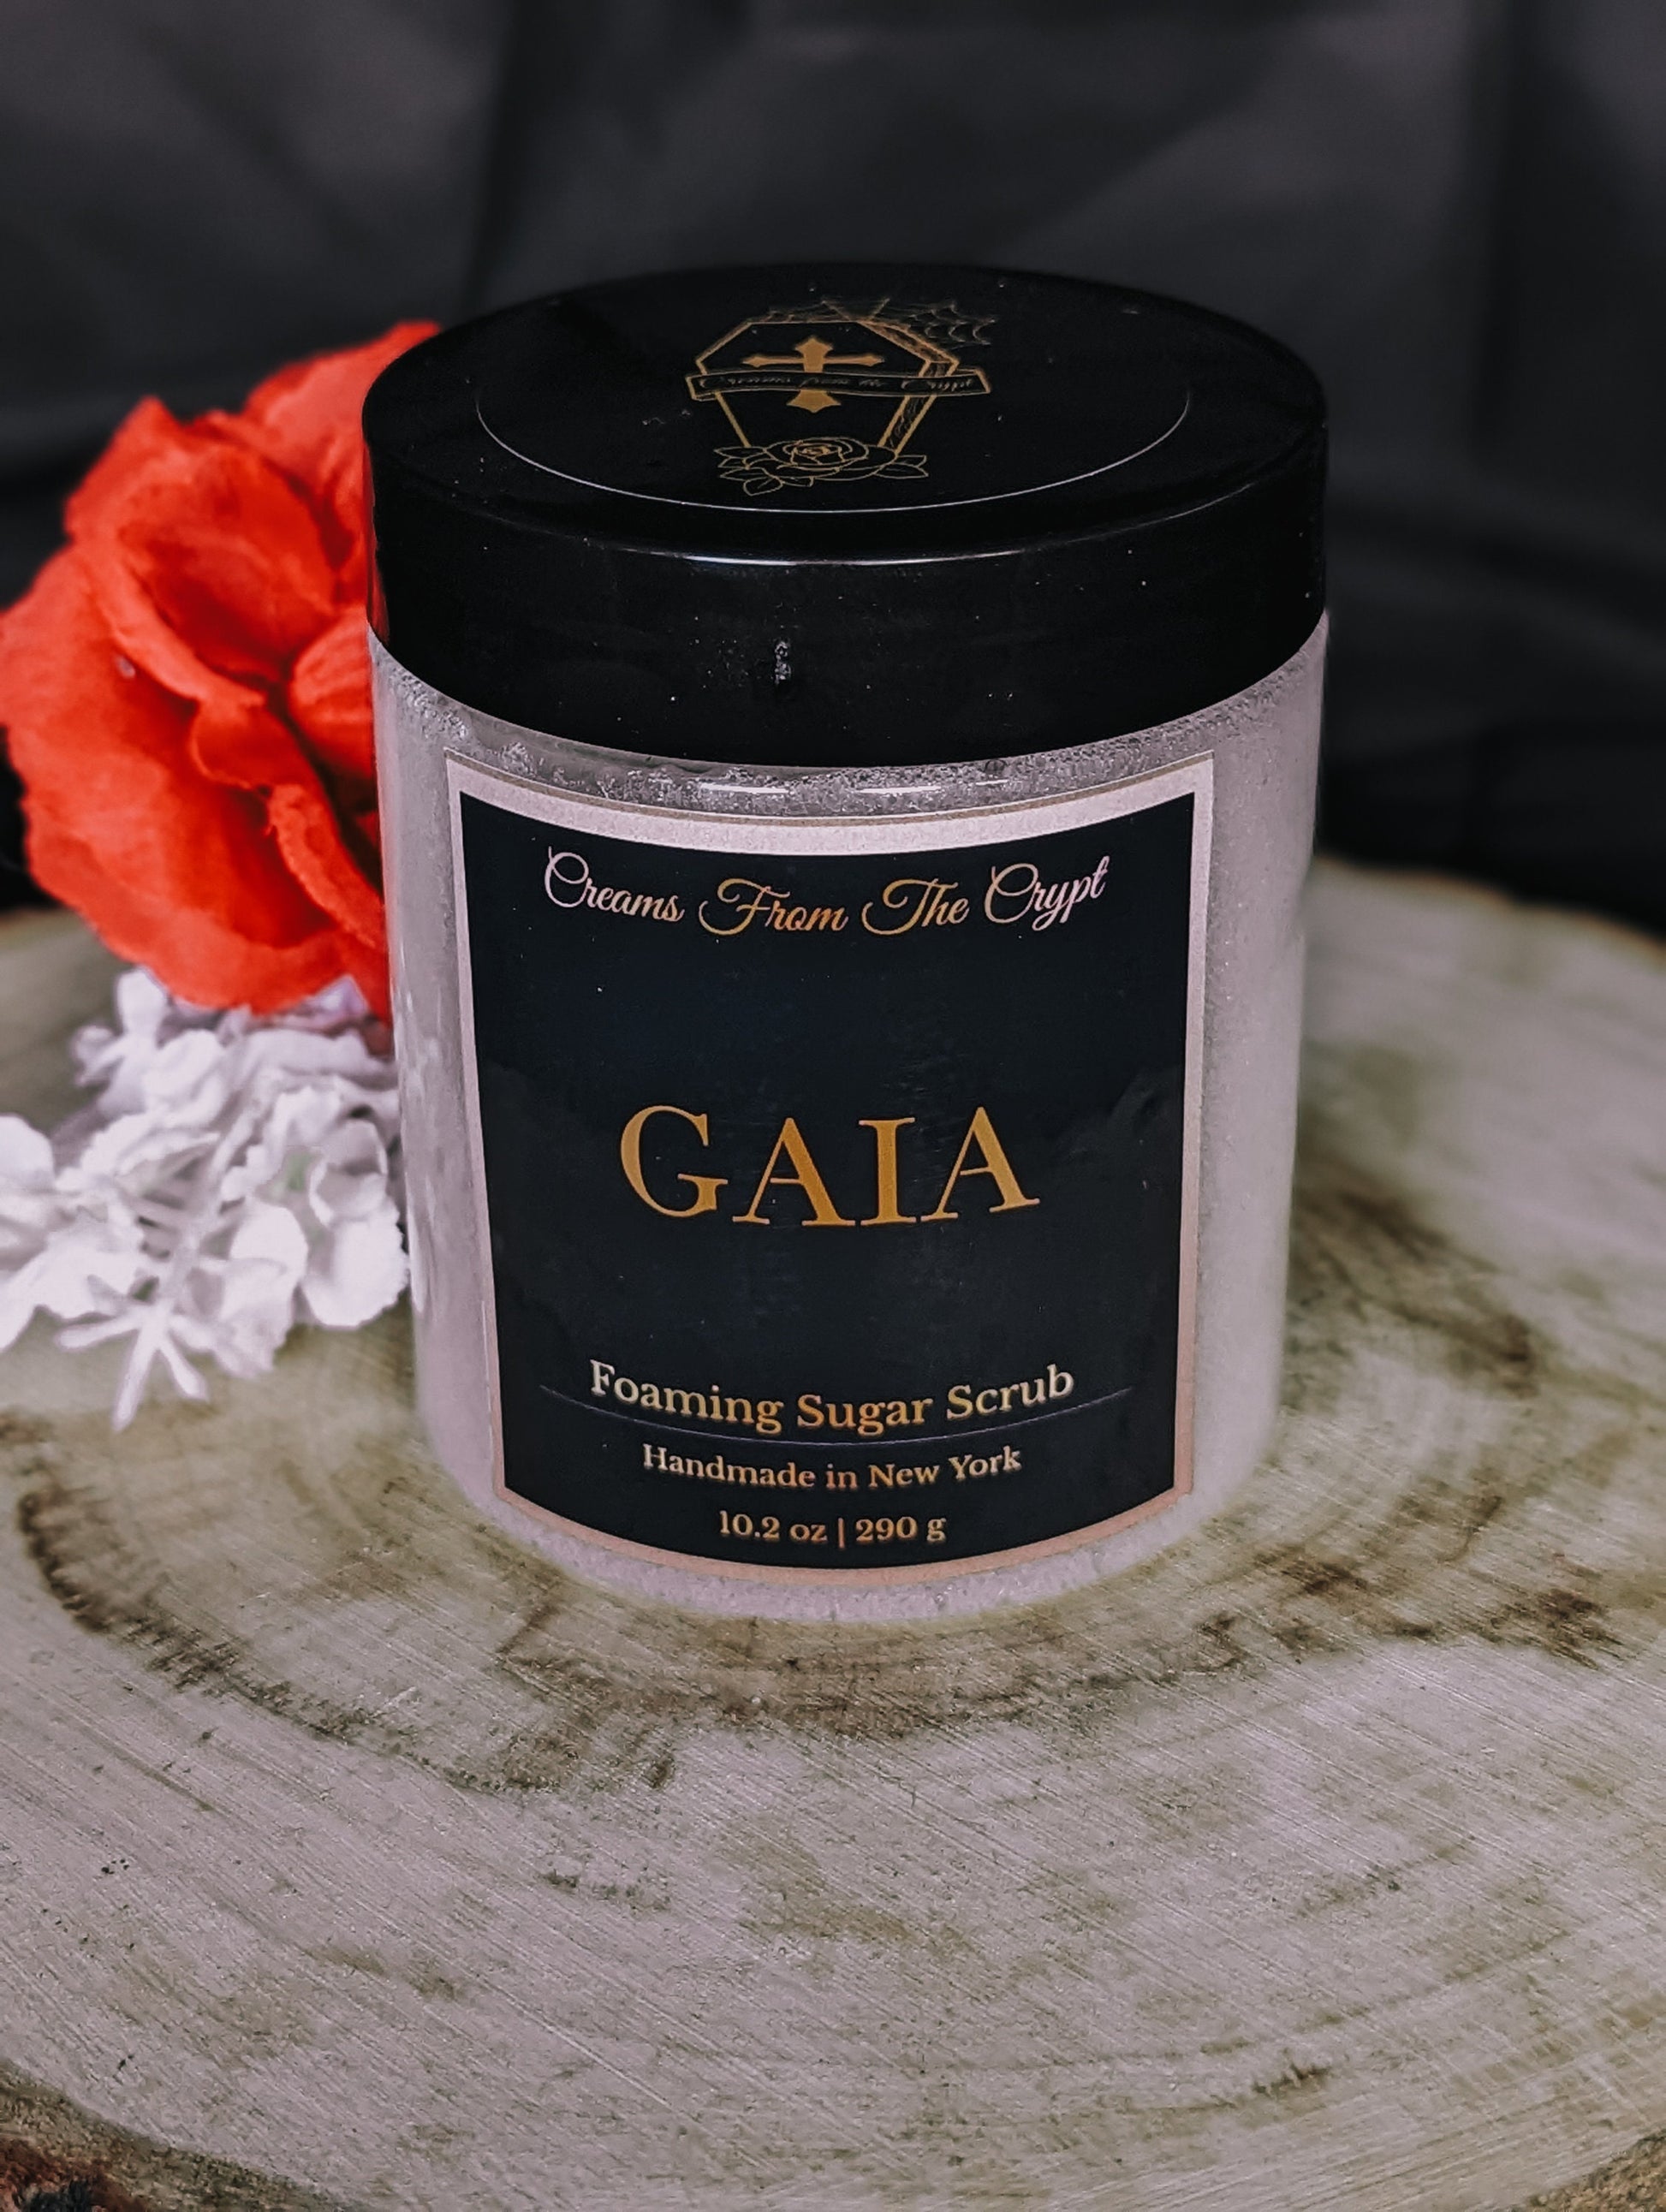 GAIA - Cherry almond scented foaming sugar scrub, body polish, soap and exfoliant, fruity fragrance, sulfate free, gothic skincare